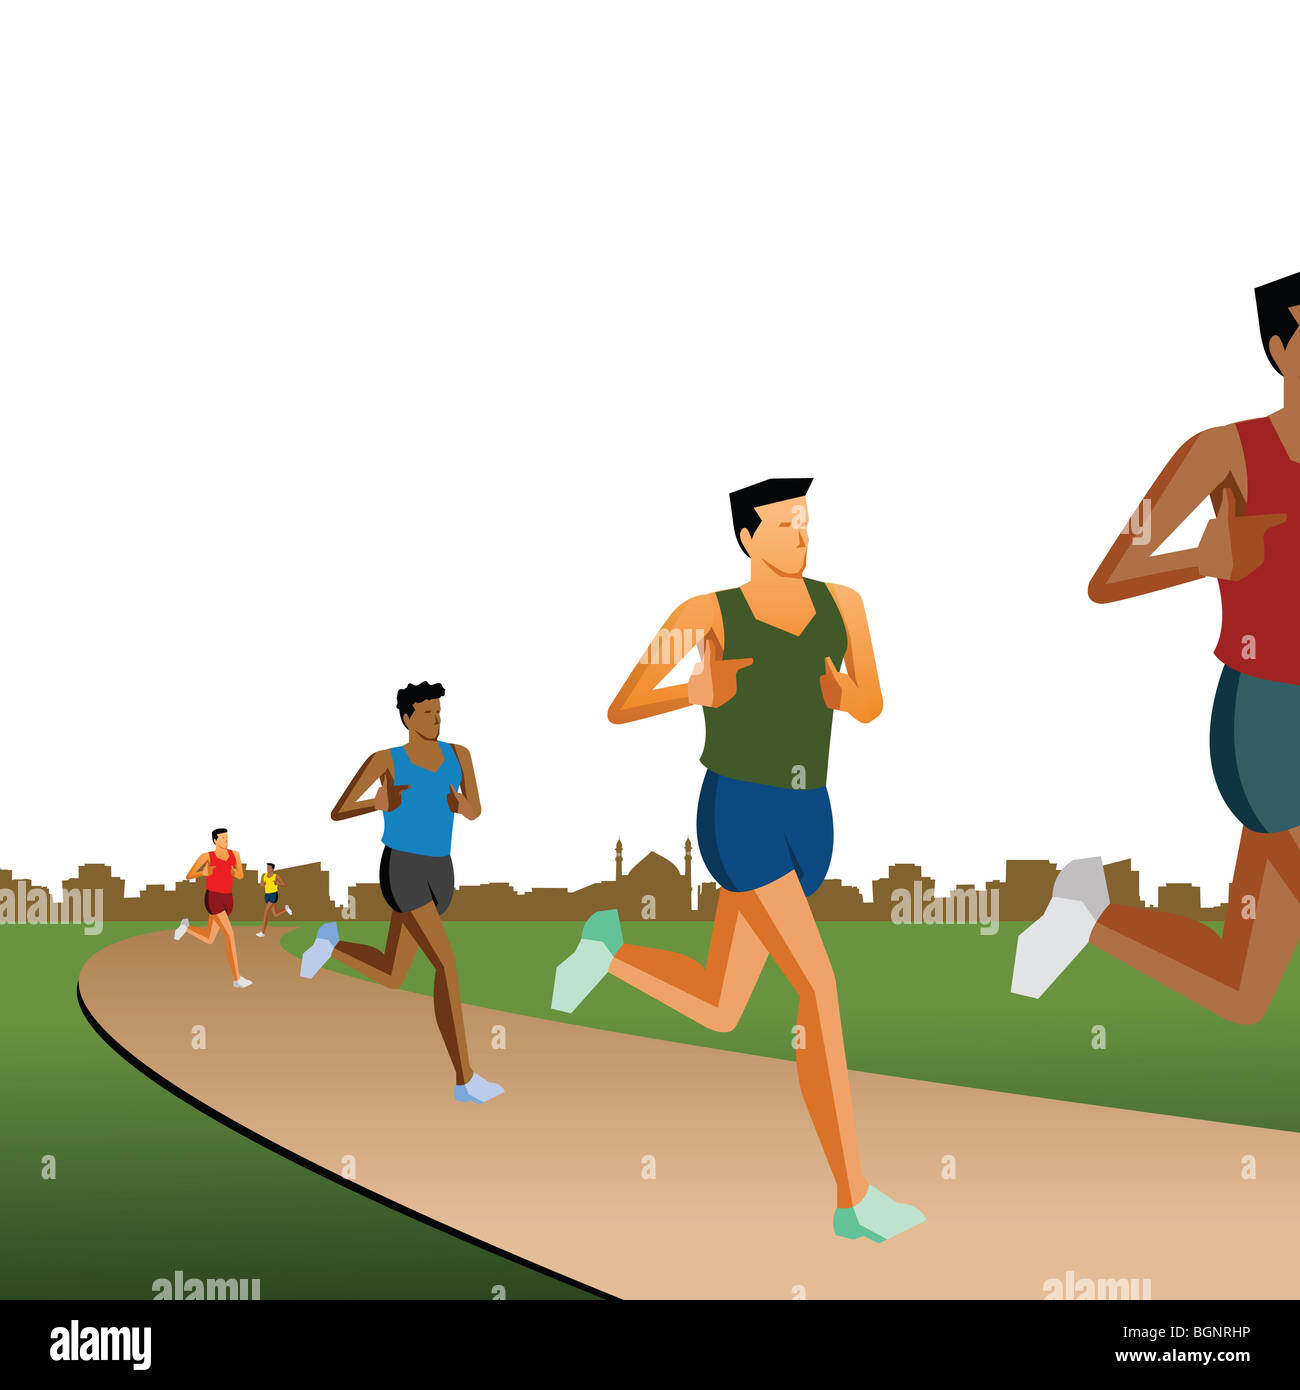 atheletes running on a track, race, white background Stock Photo